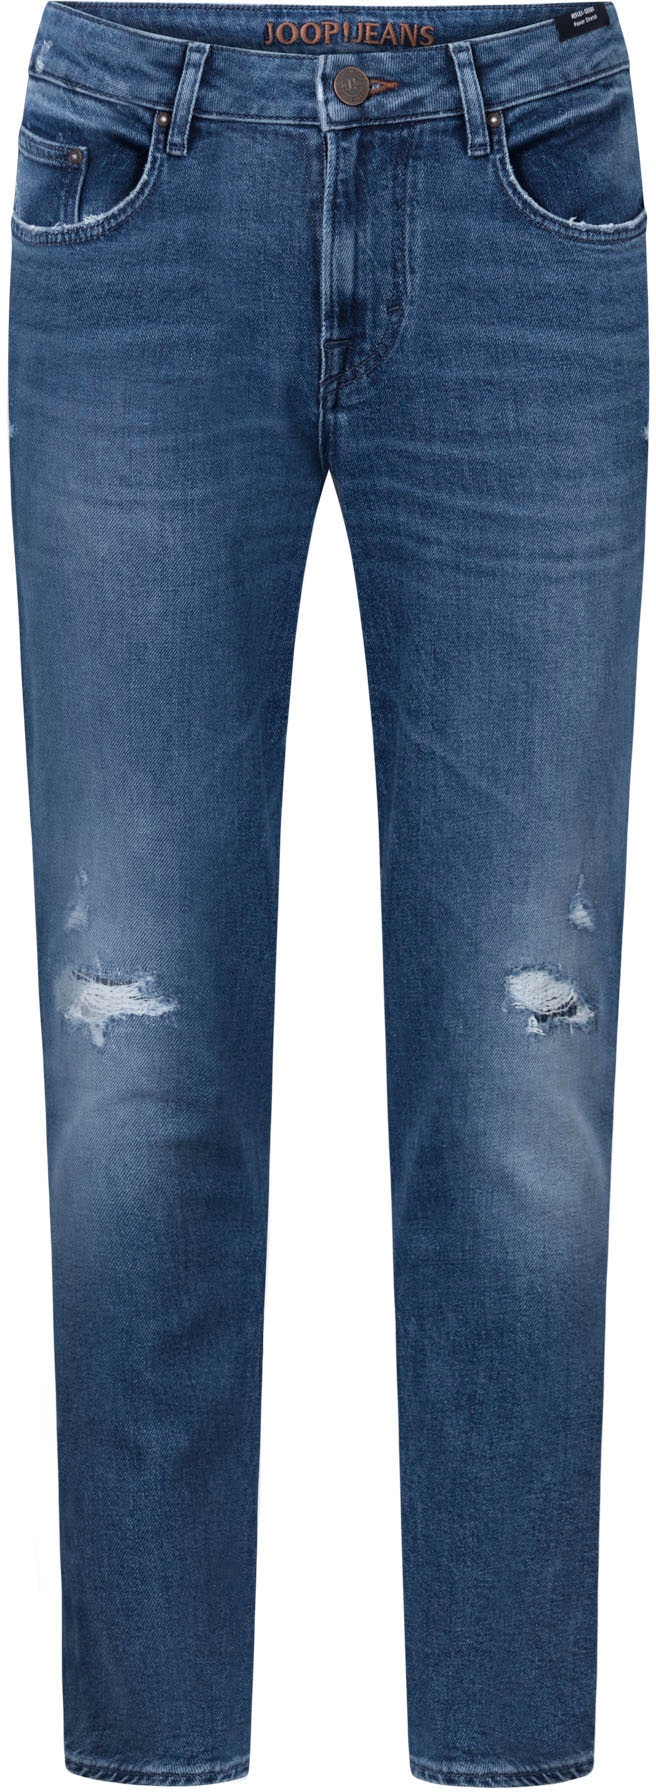 Joop Jeans Straight-Jeans, in 5-Pocket sur Form Trouver